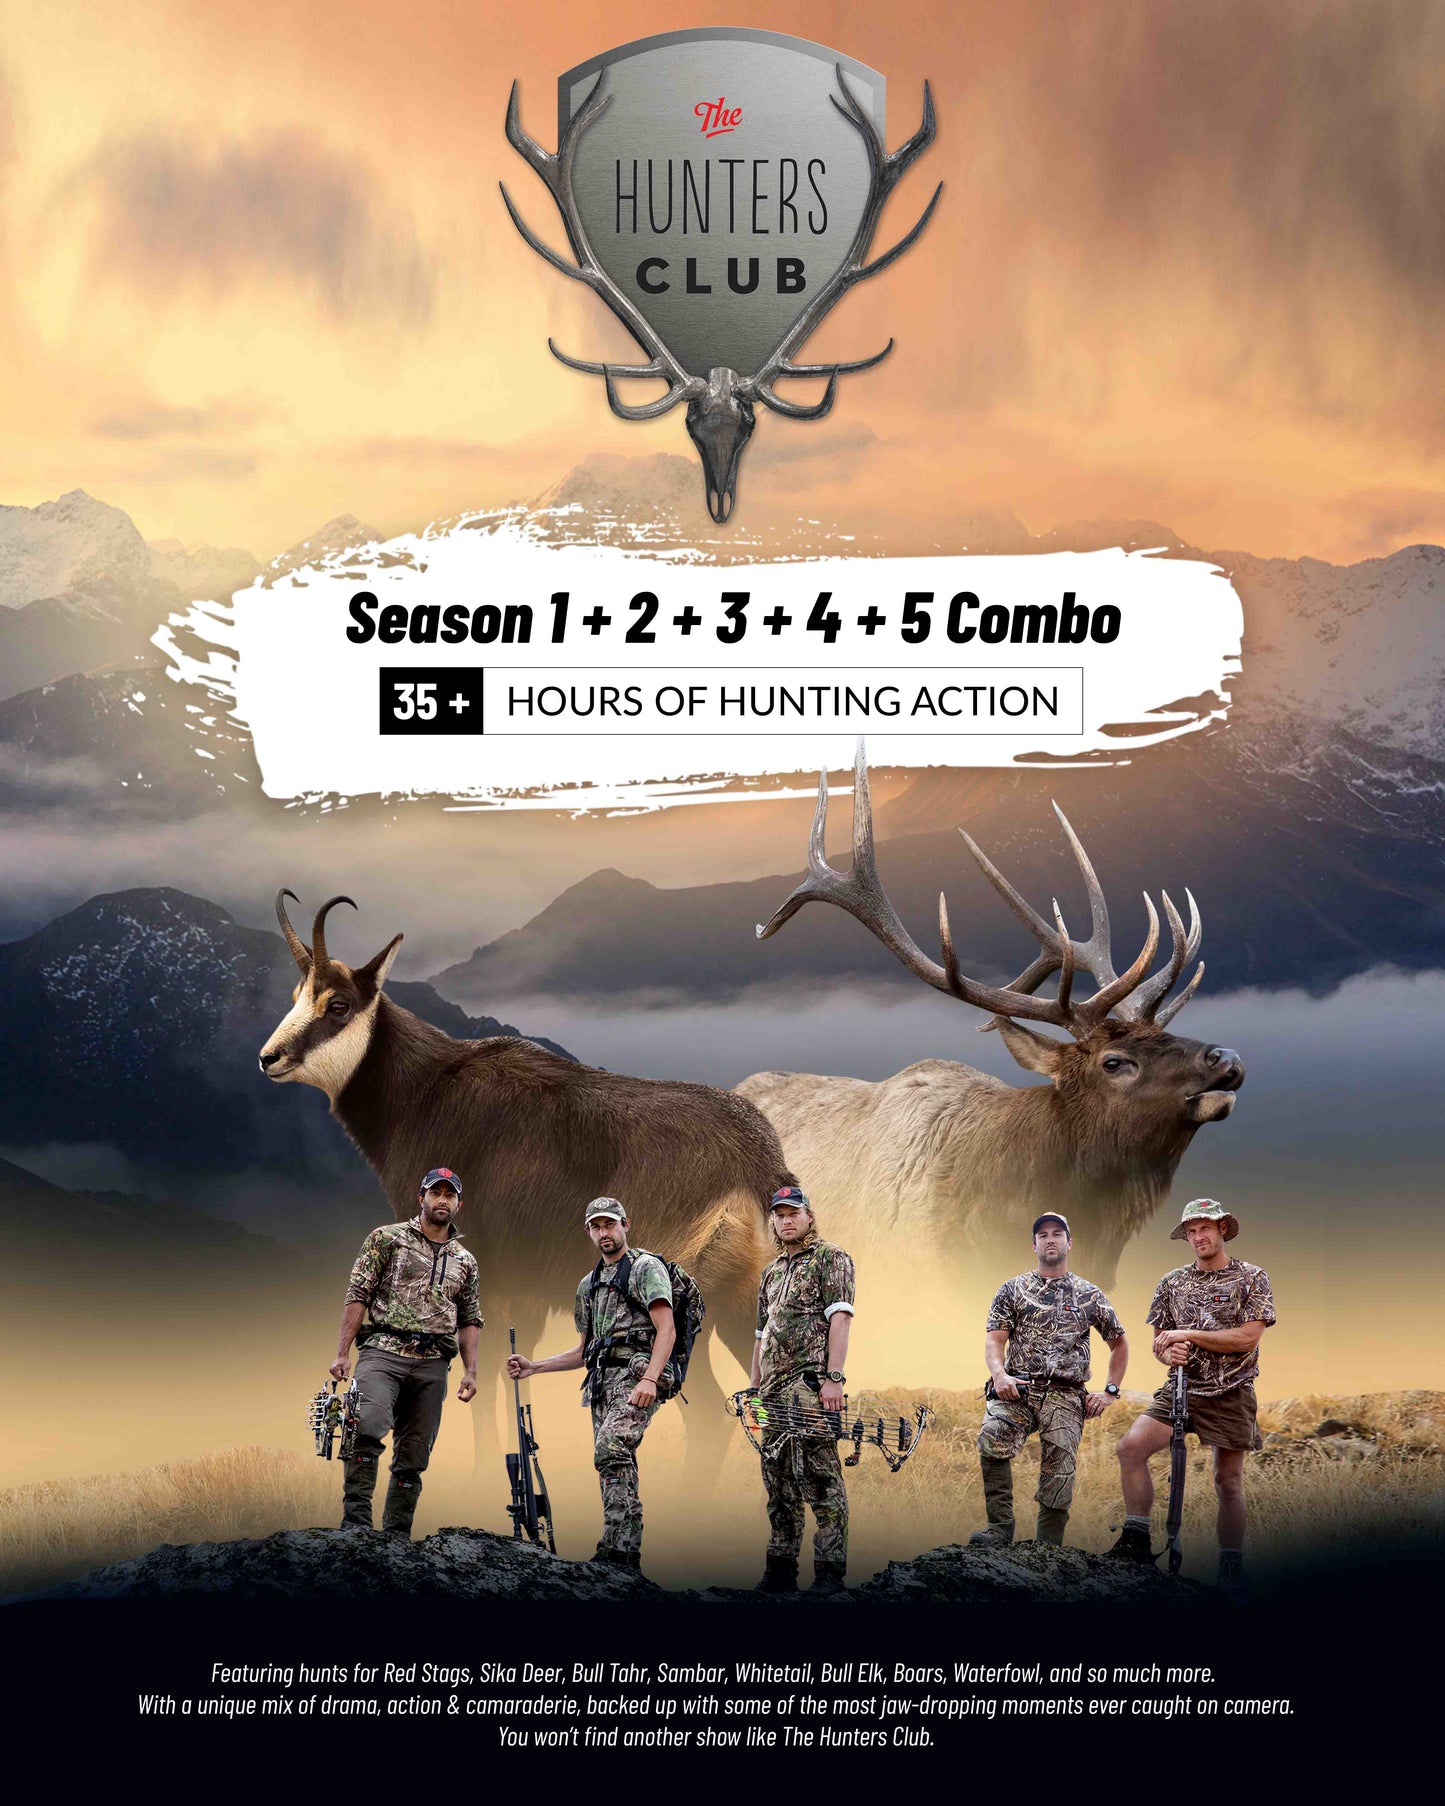 The Hunters Club - Season 1 > 5 Combo